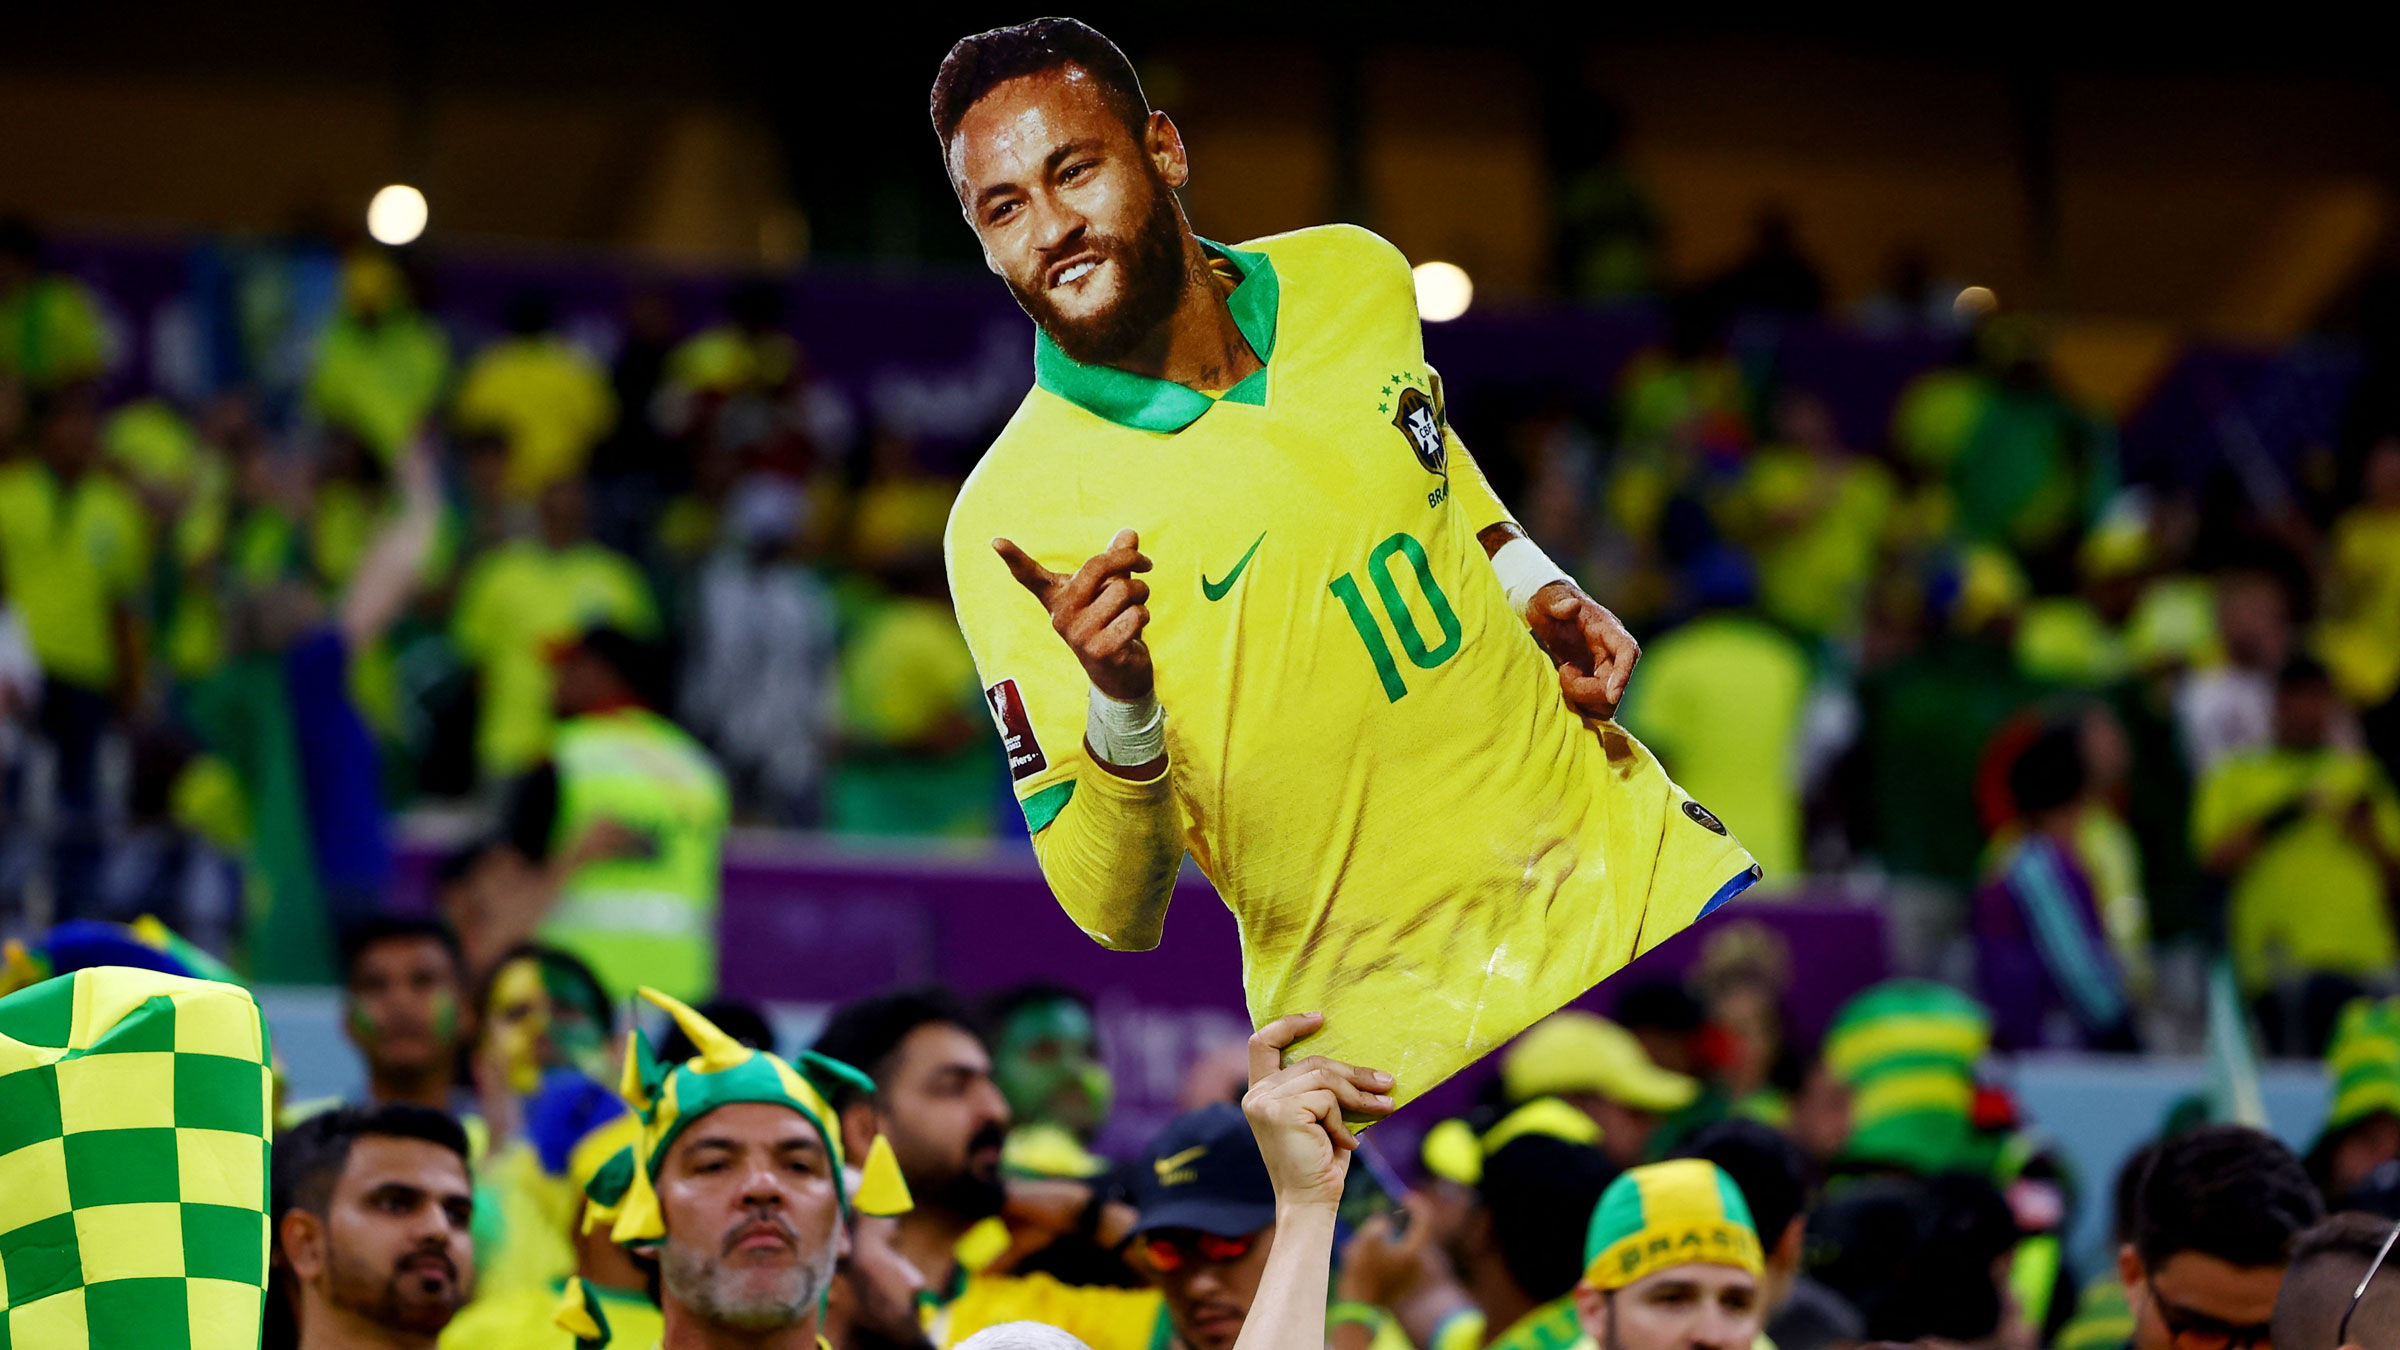 A Brazil fan displays a cardboard cutout of Neymar before the Serbia match.